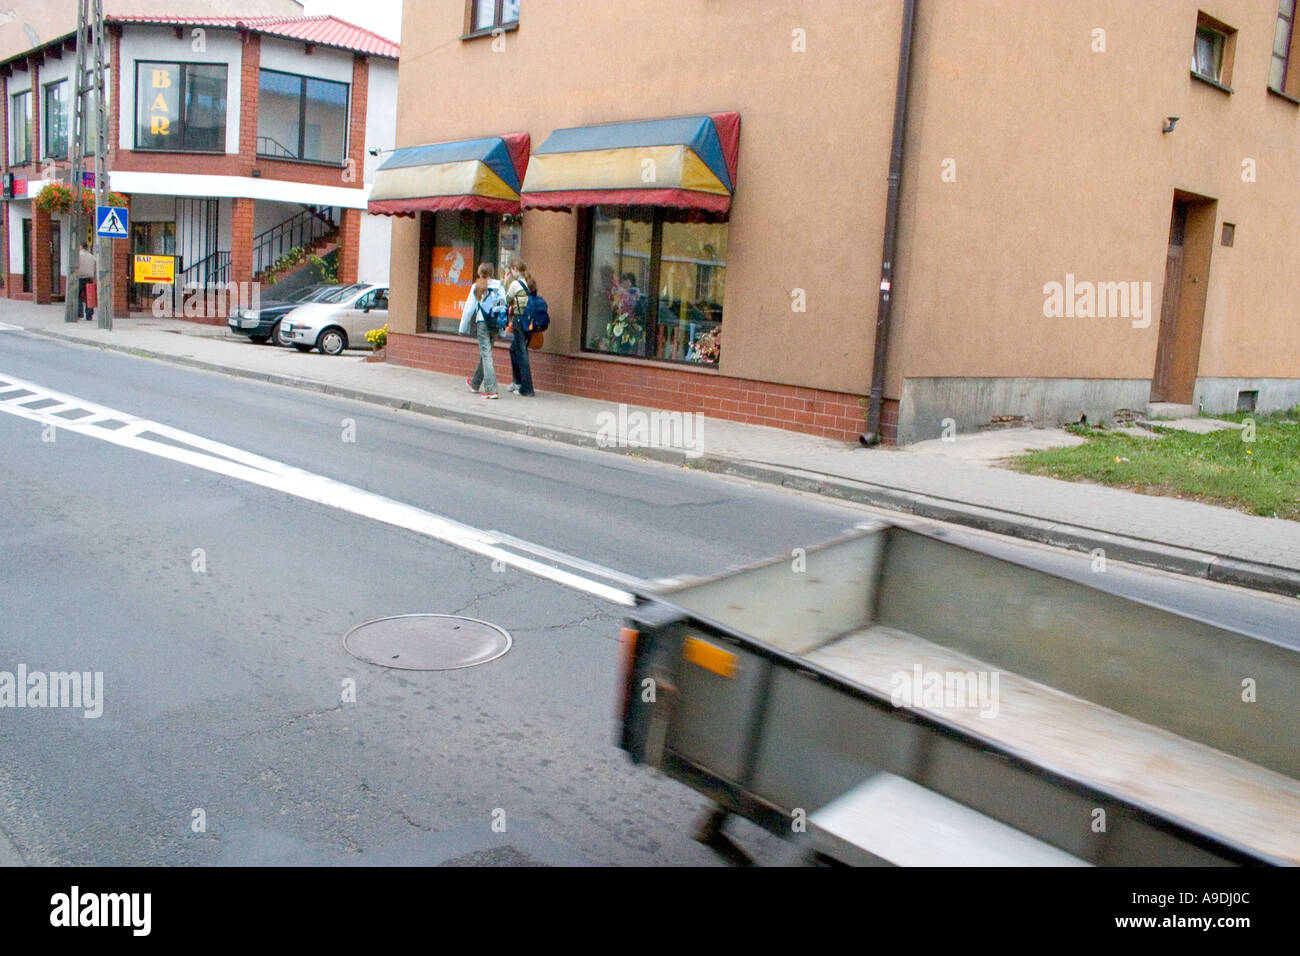 Teens with backpacks walking by some shops. Rawa Mazowiecka Poland Stock Photo